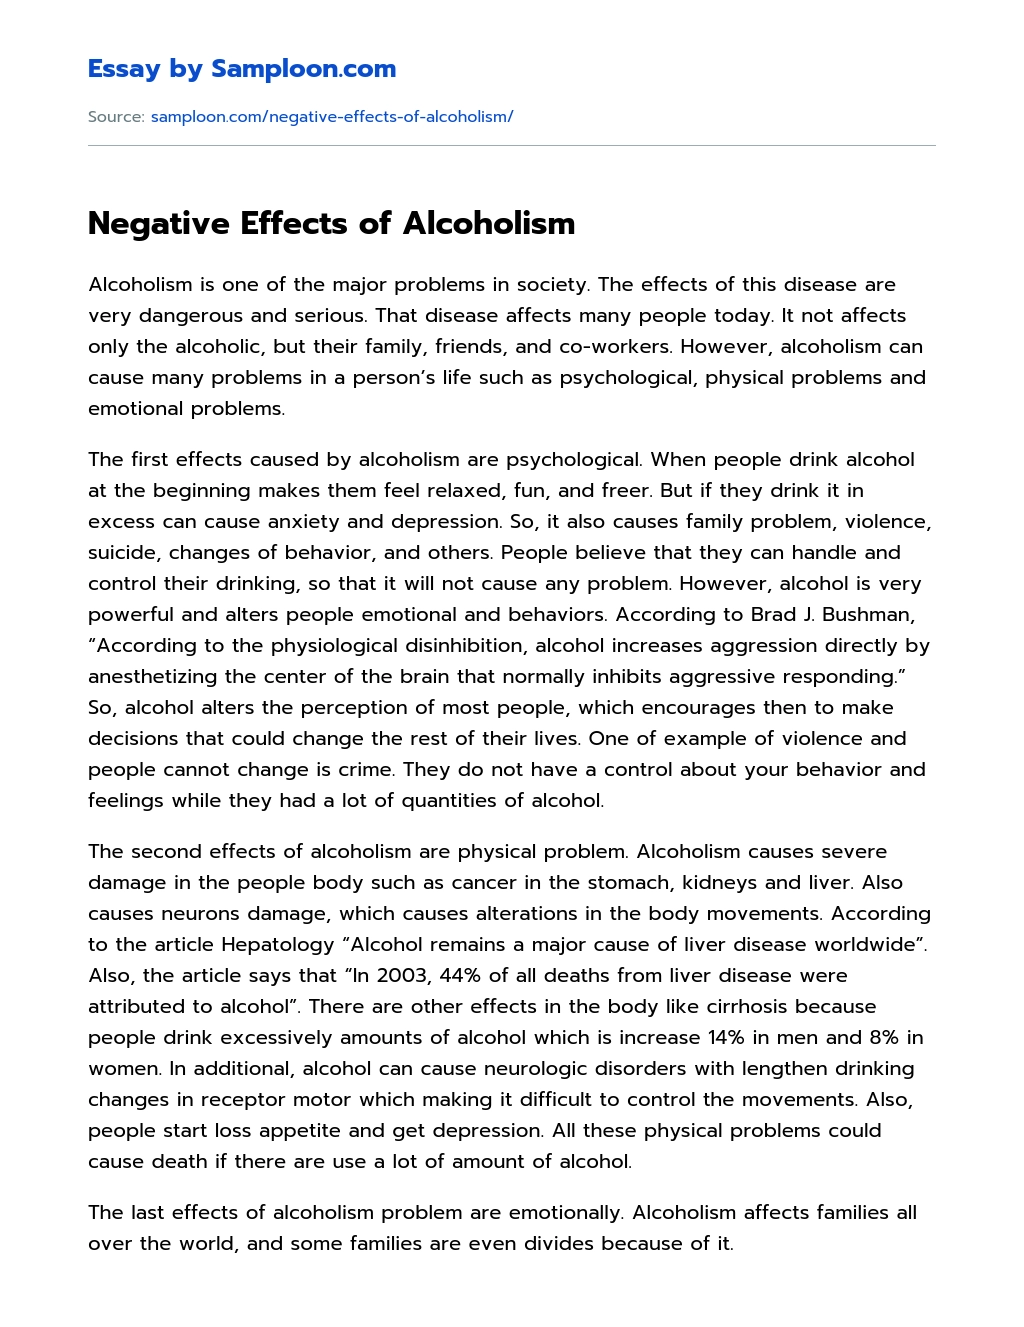 Negative Effects of Alcoholism essay